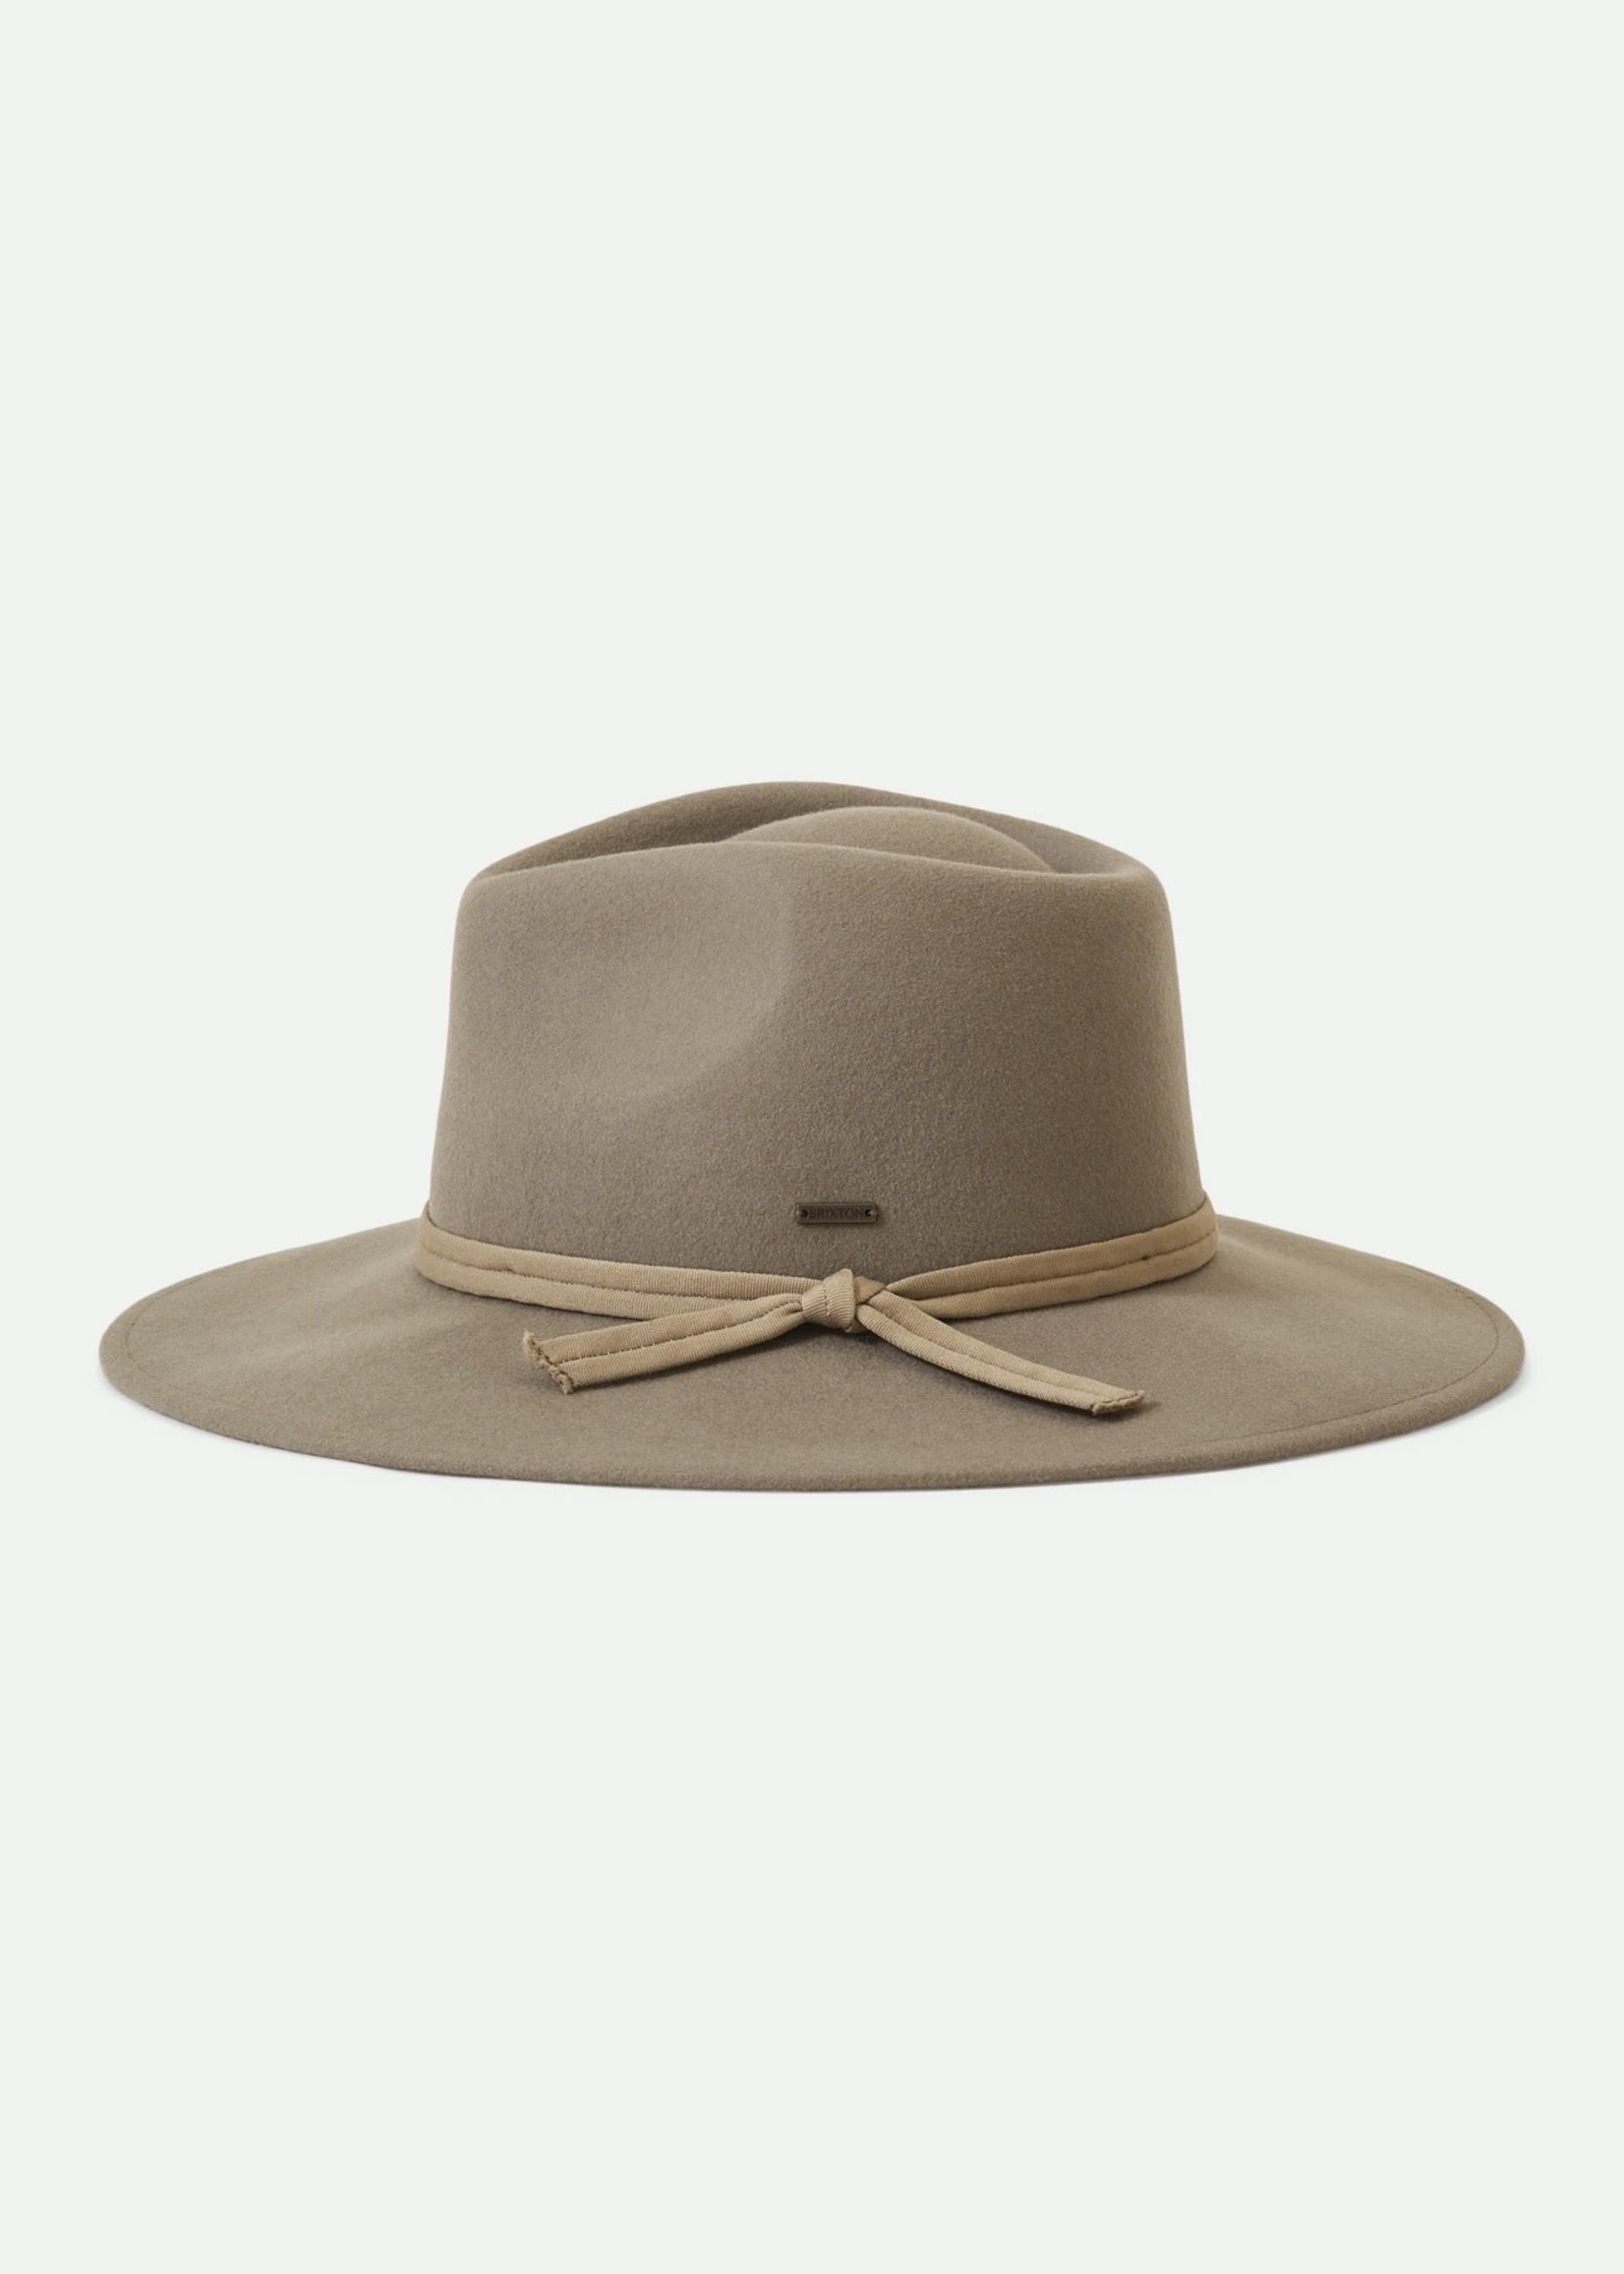 BRIXTON Joanna Felt Packable Hat